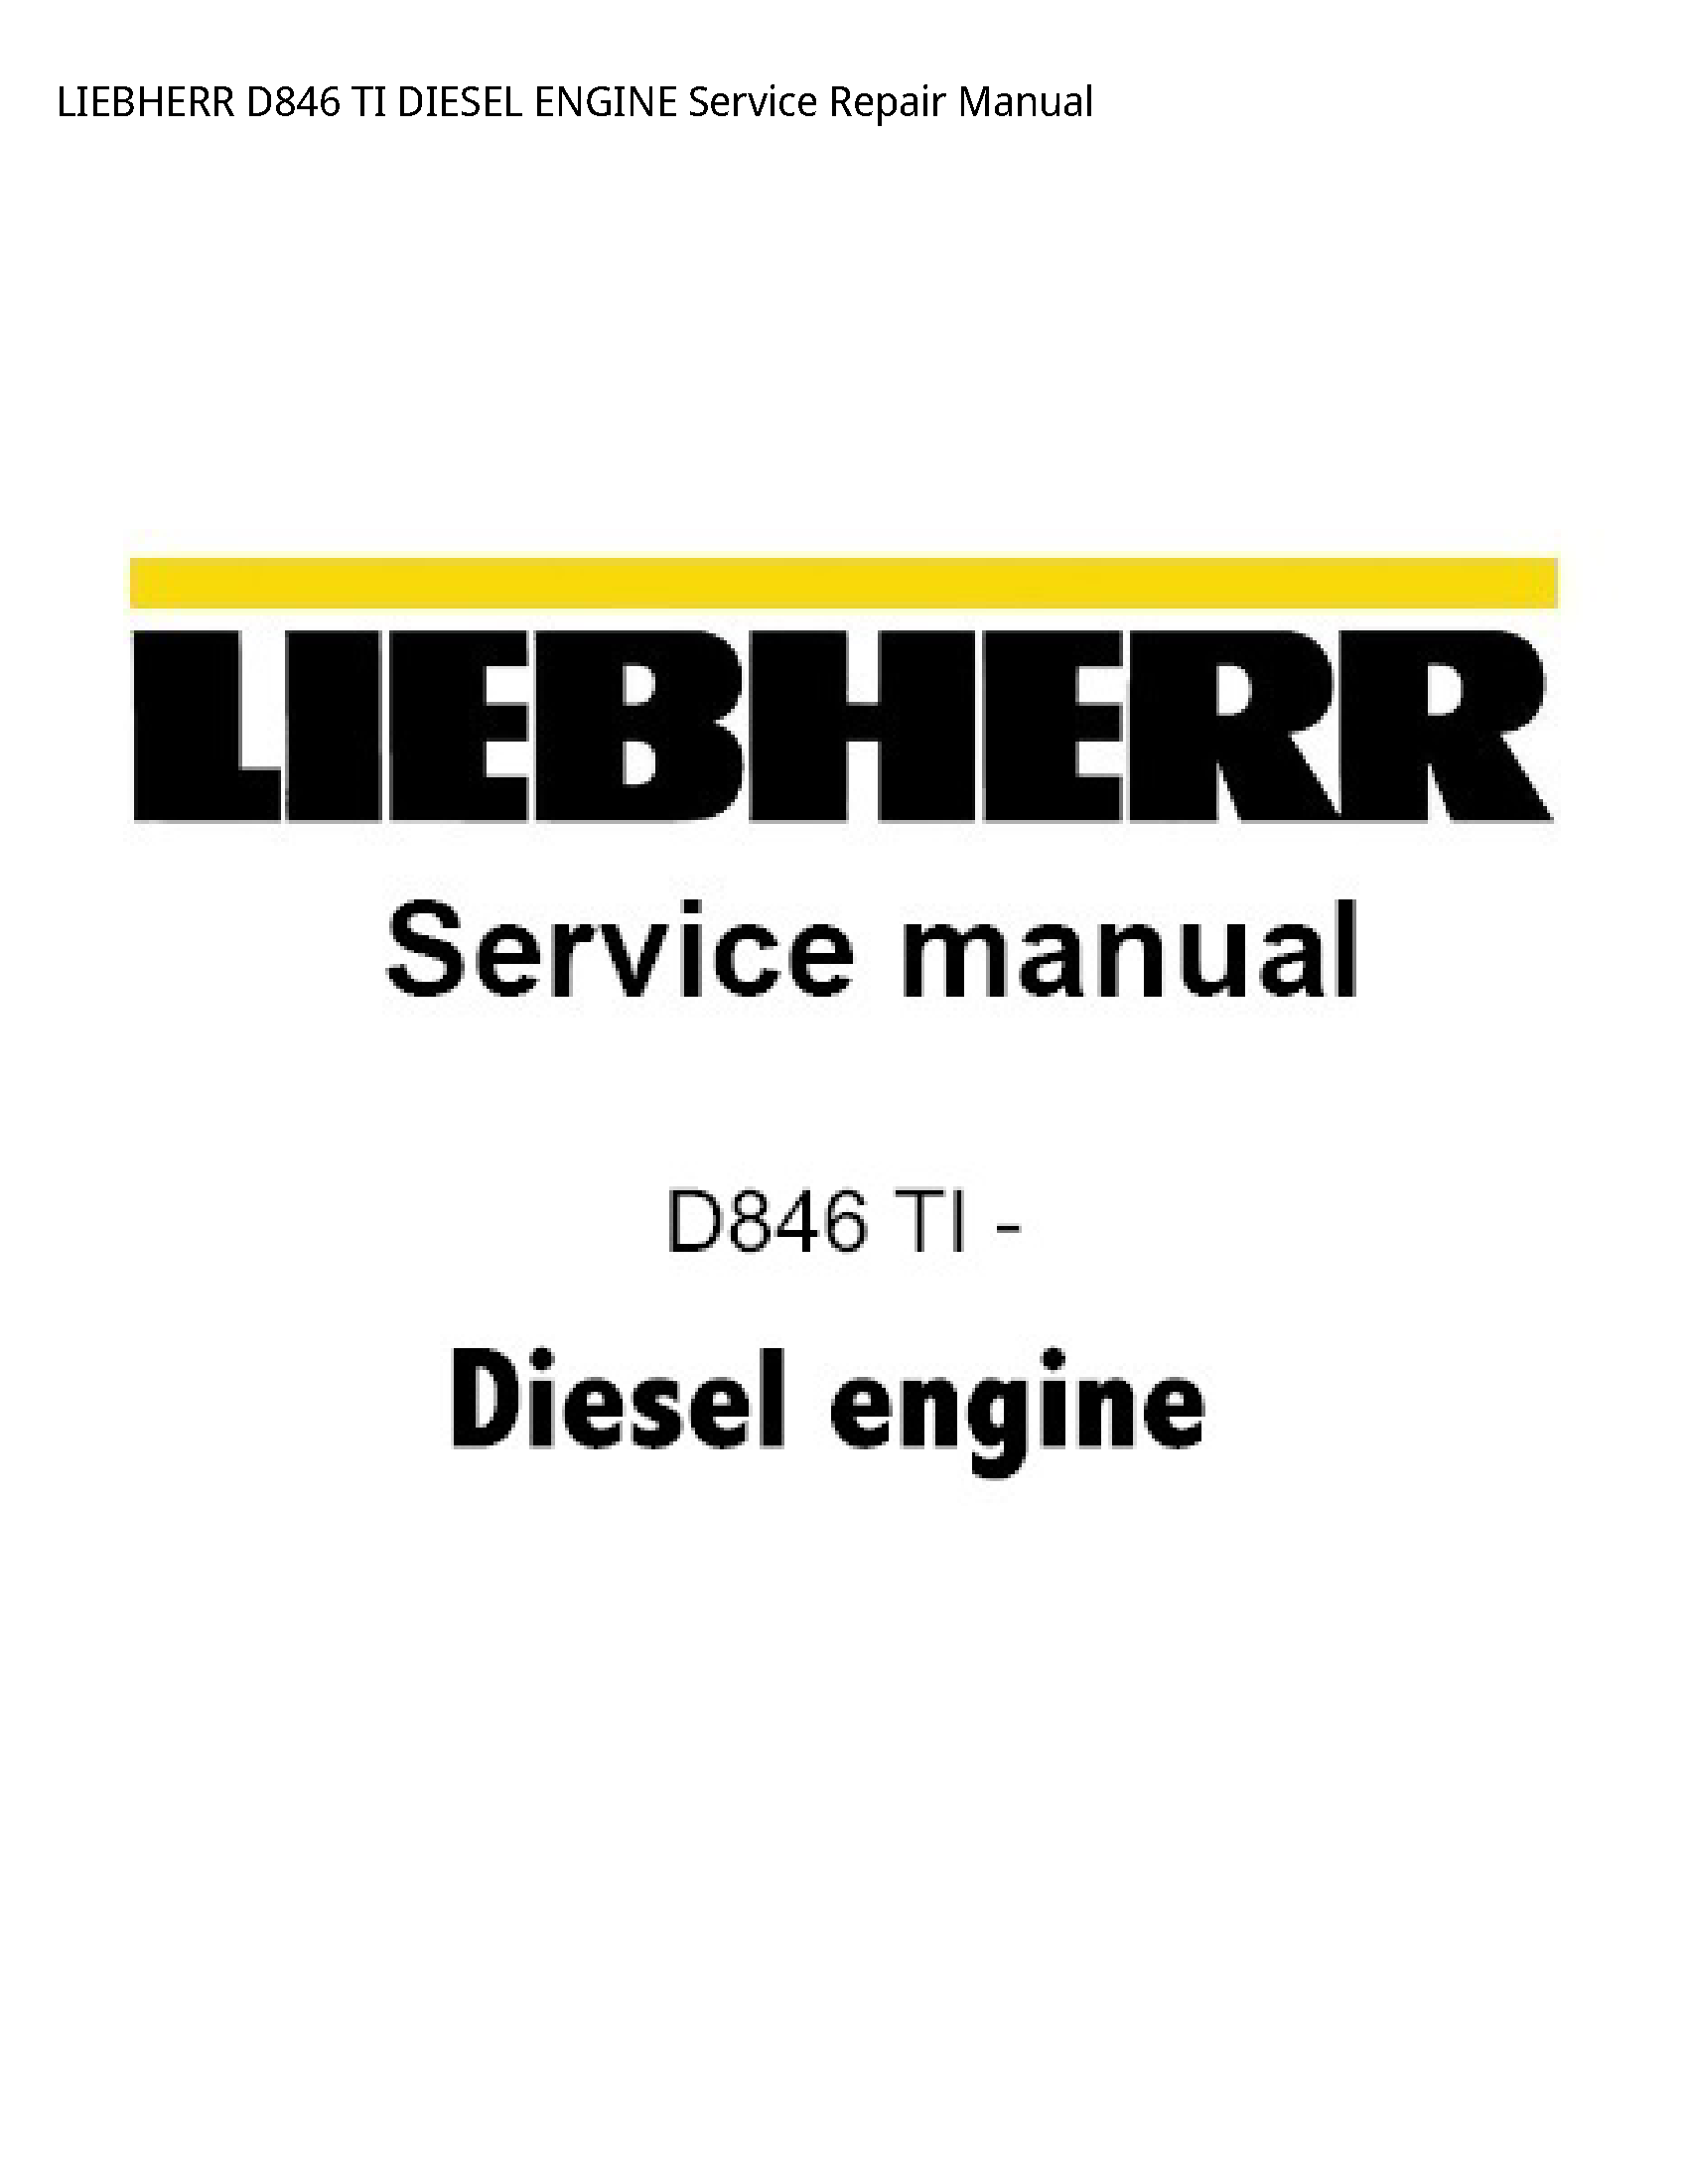 Liebherr D846 TI DIESEL ENGINE manual